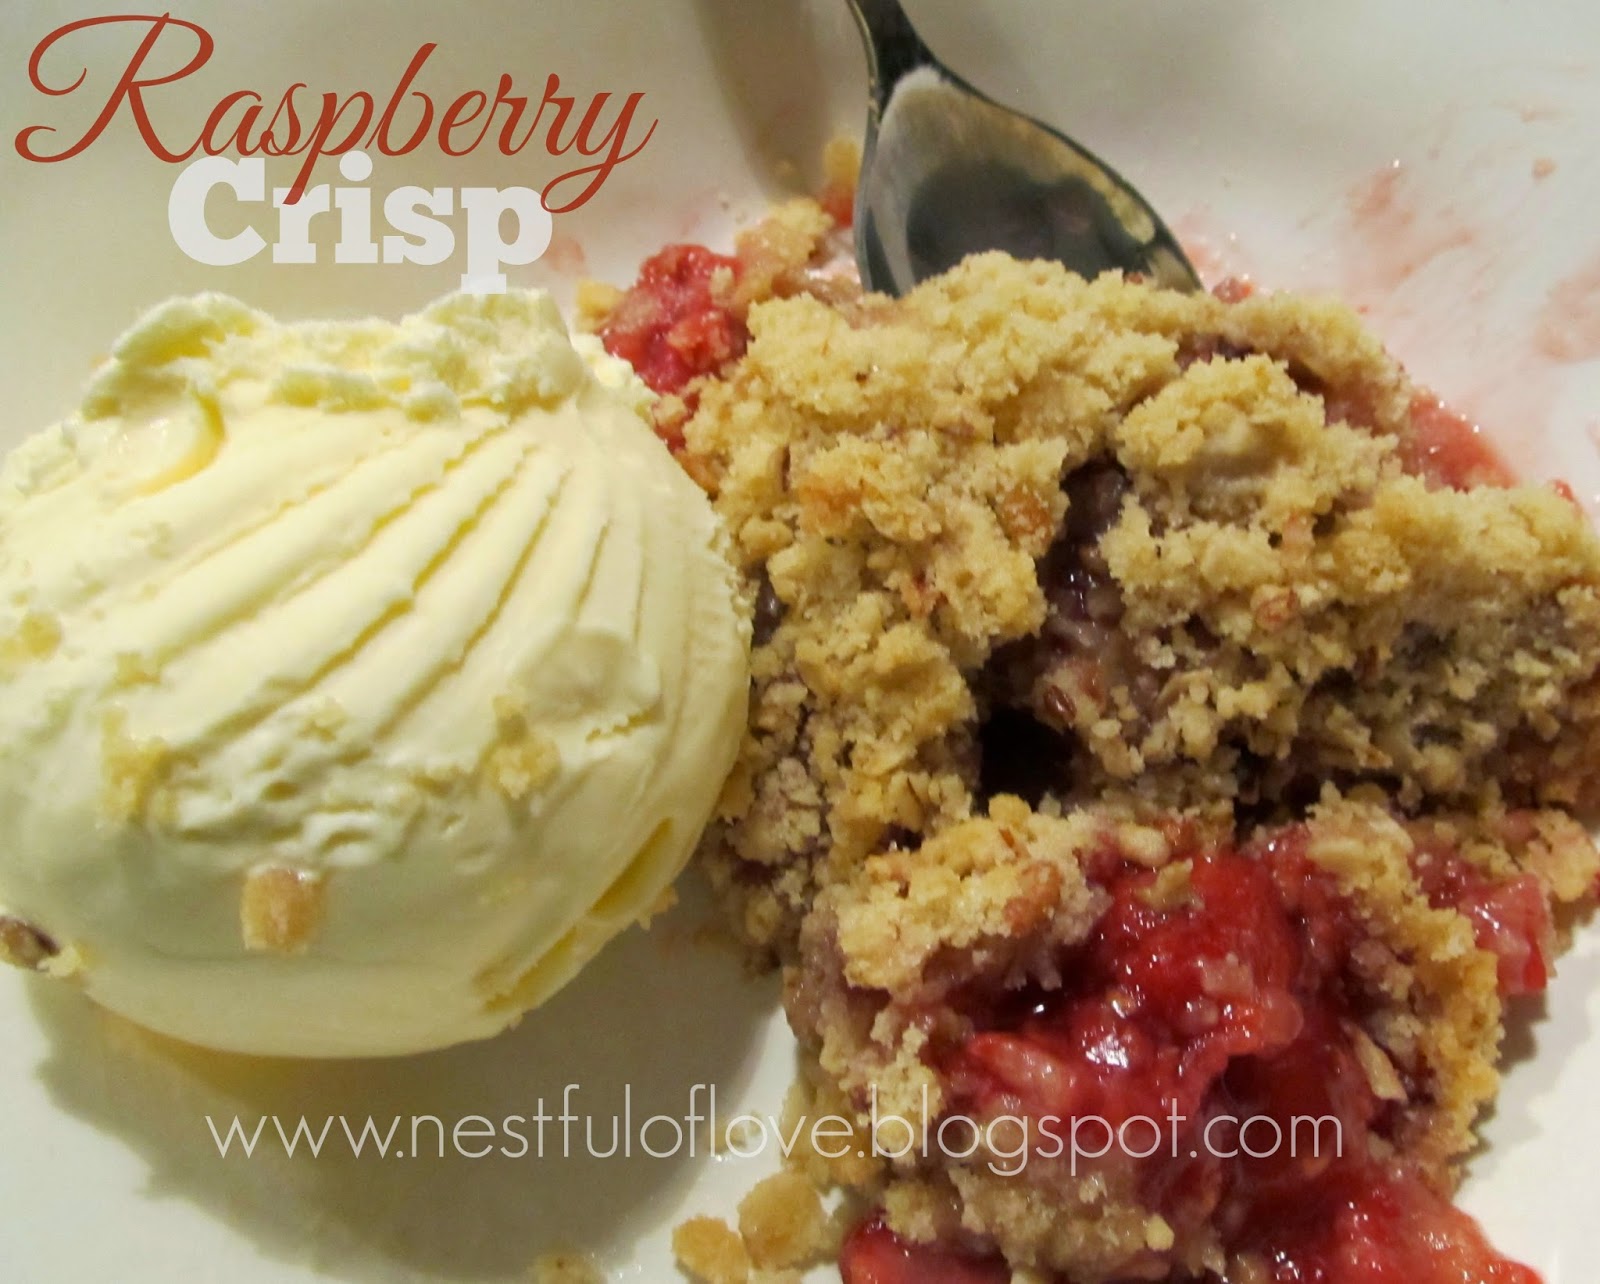 Nestful of love: Raspberry Crisp (The perfect dessert)